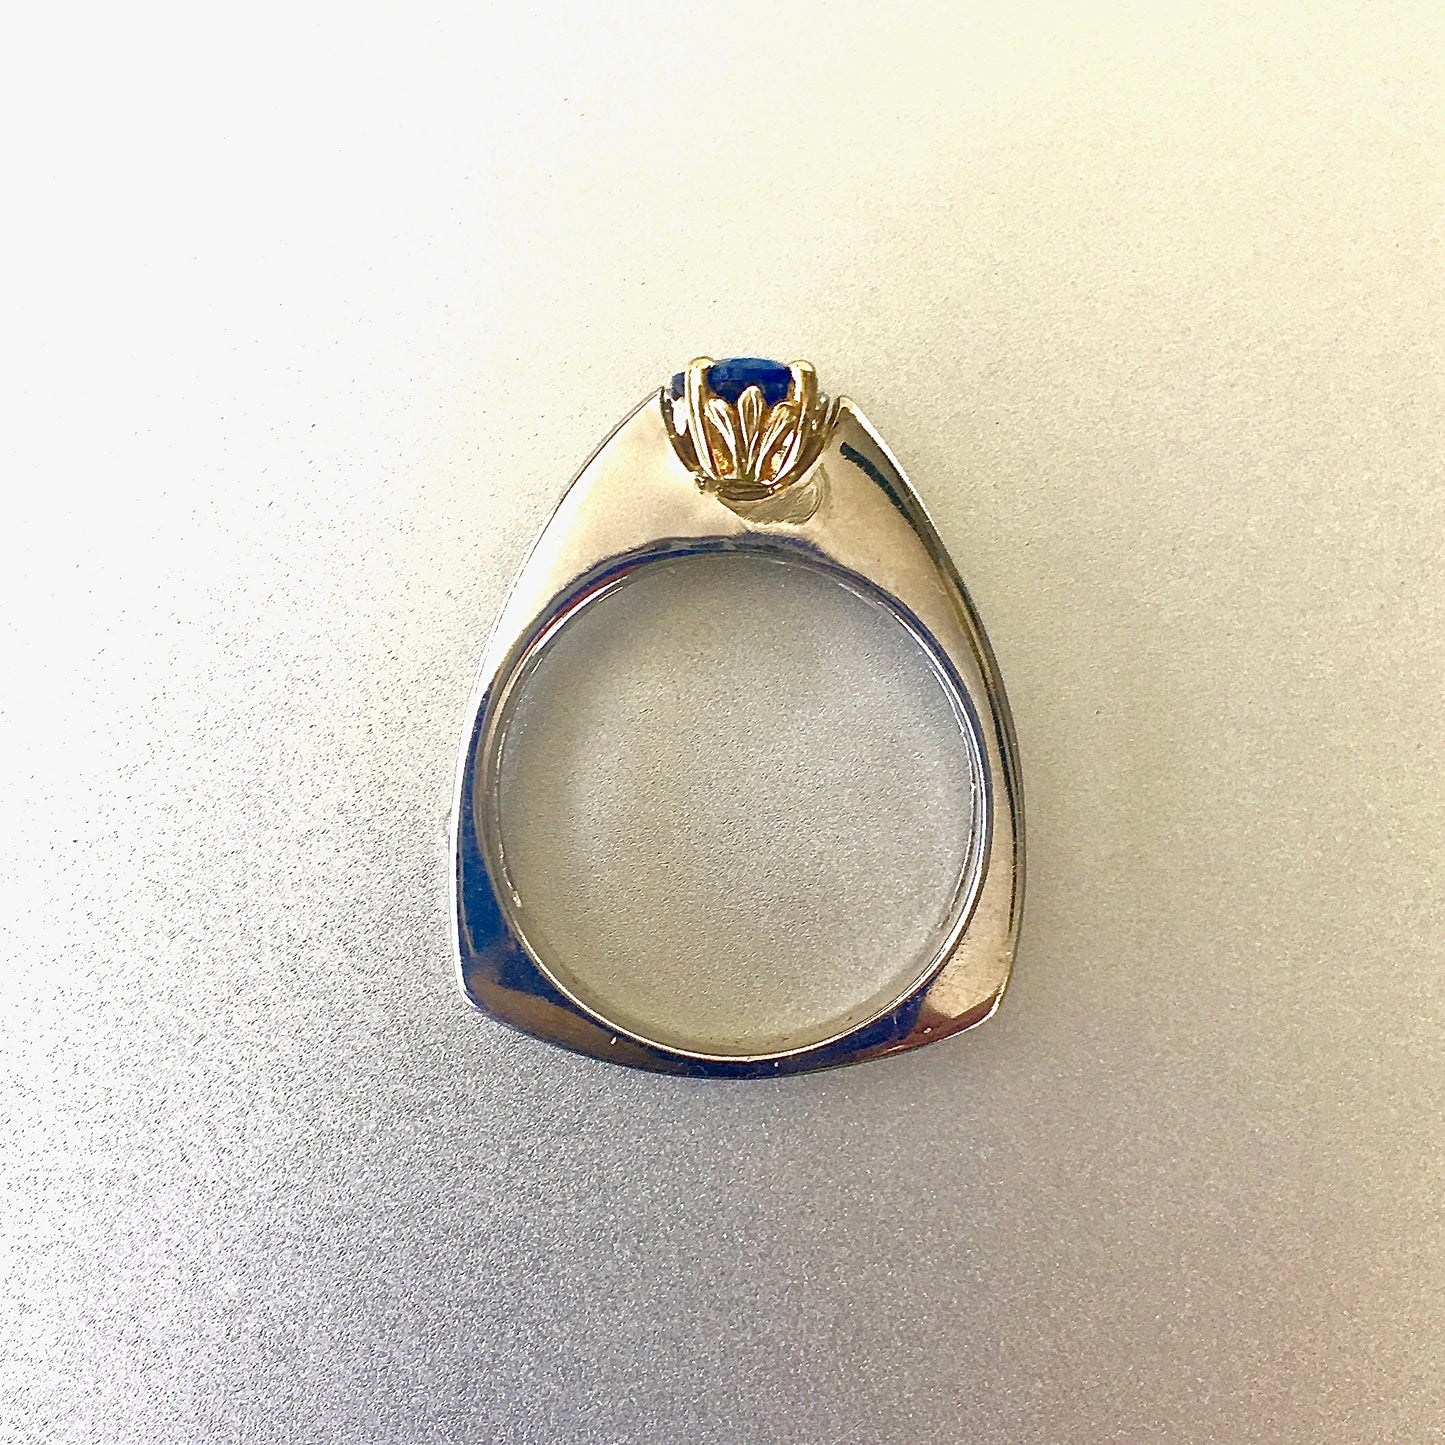 1.05 Blue Sapphire Ring